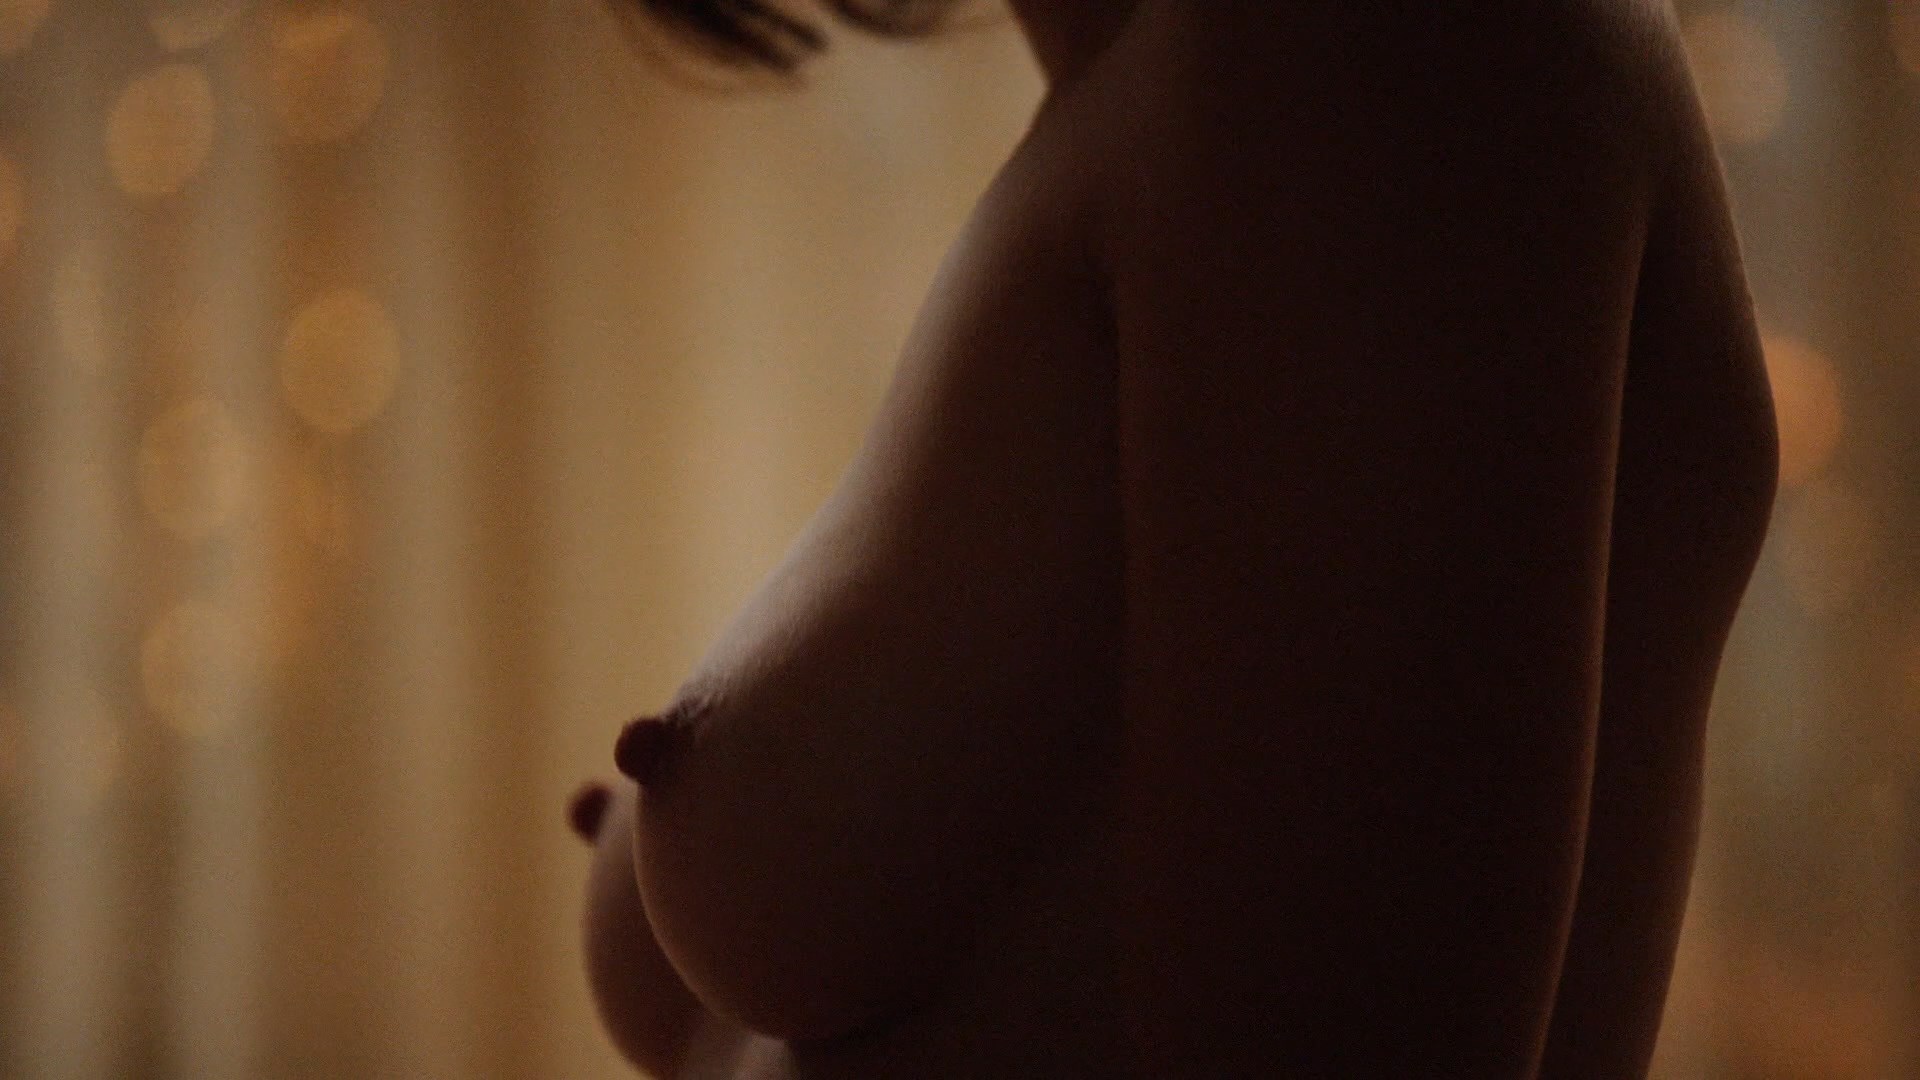 Lizzy caplan naked perky boobs scenes photo